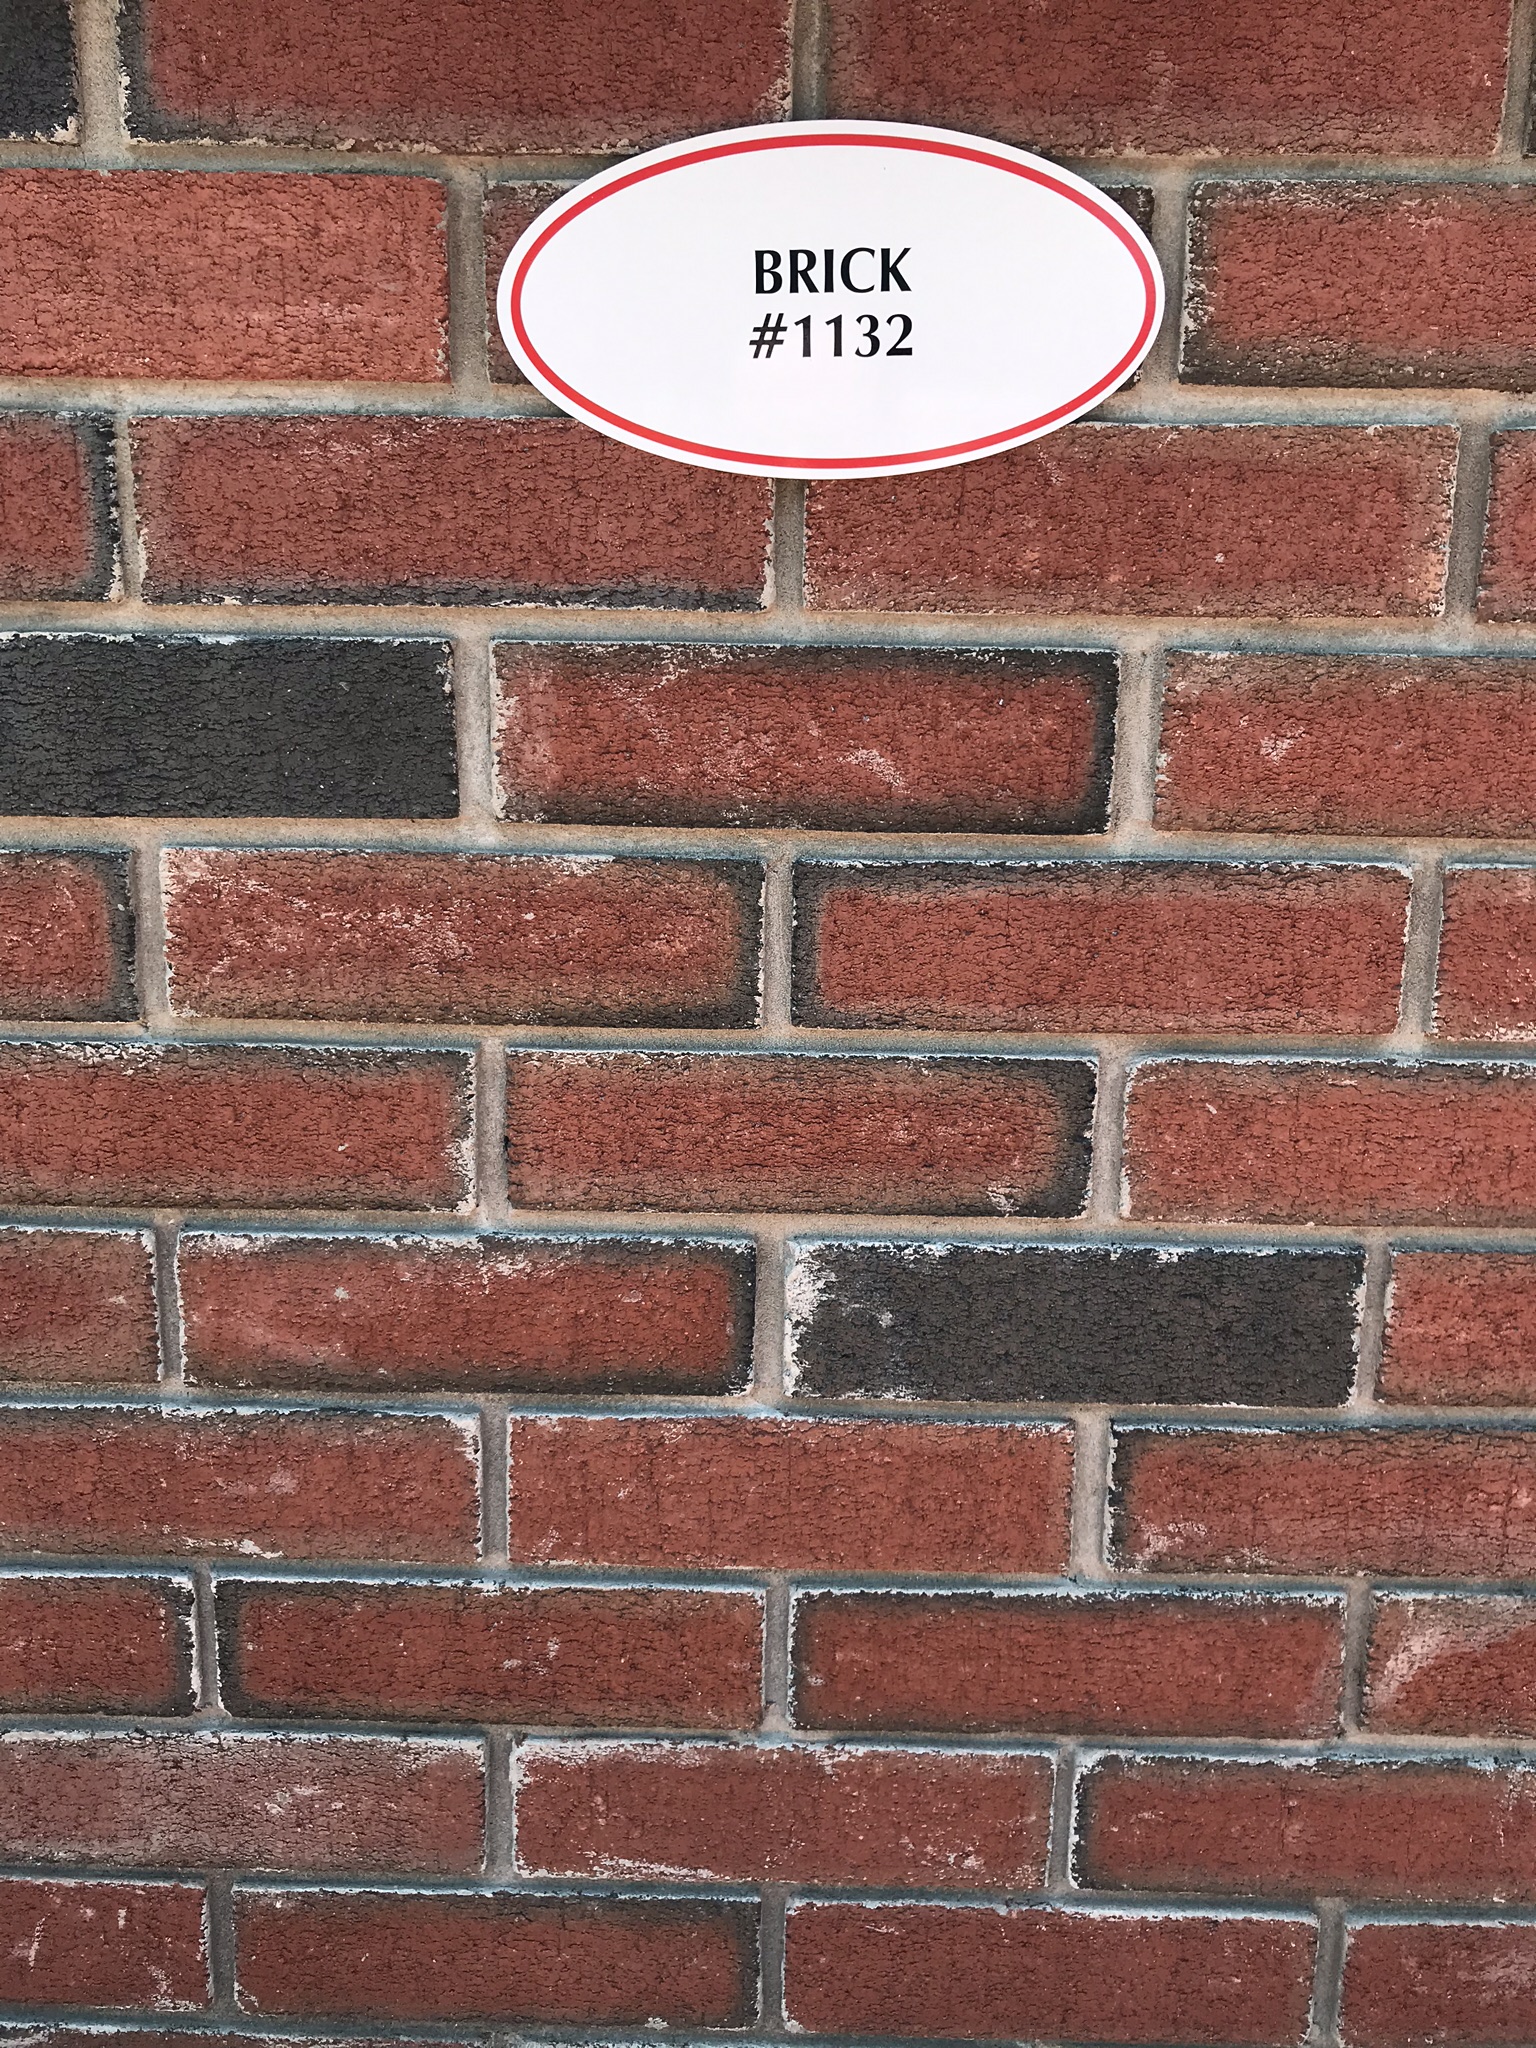 Brick #1132